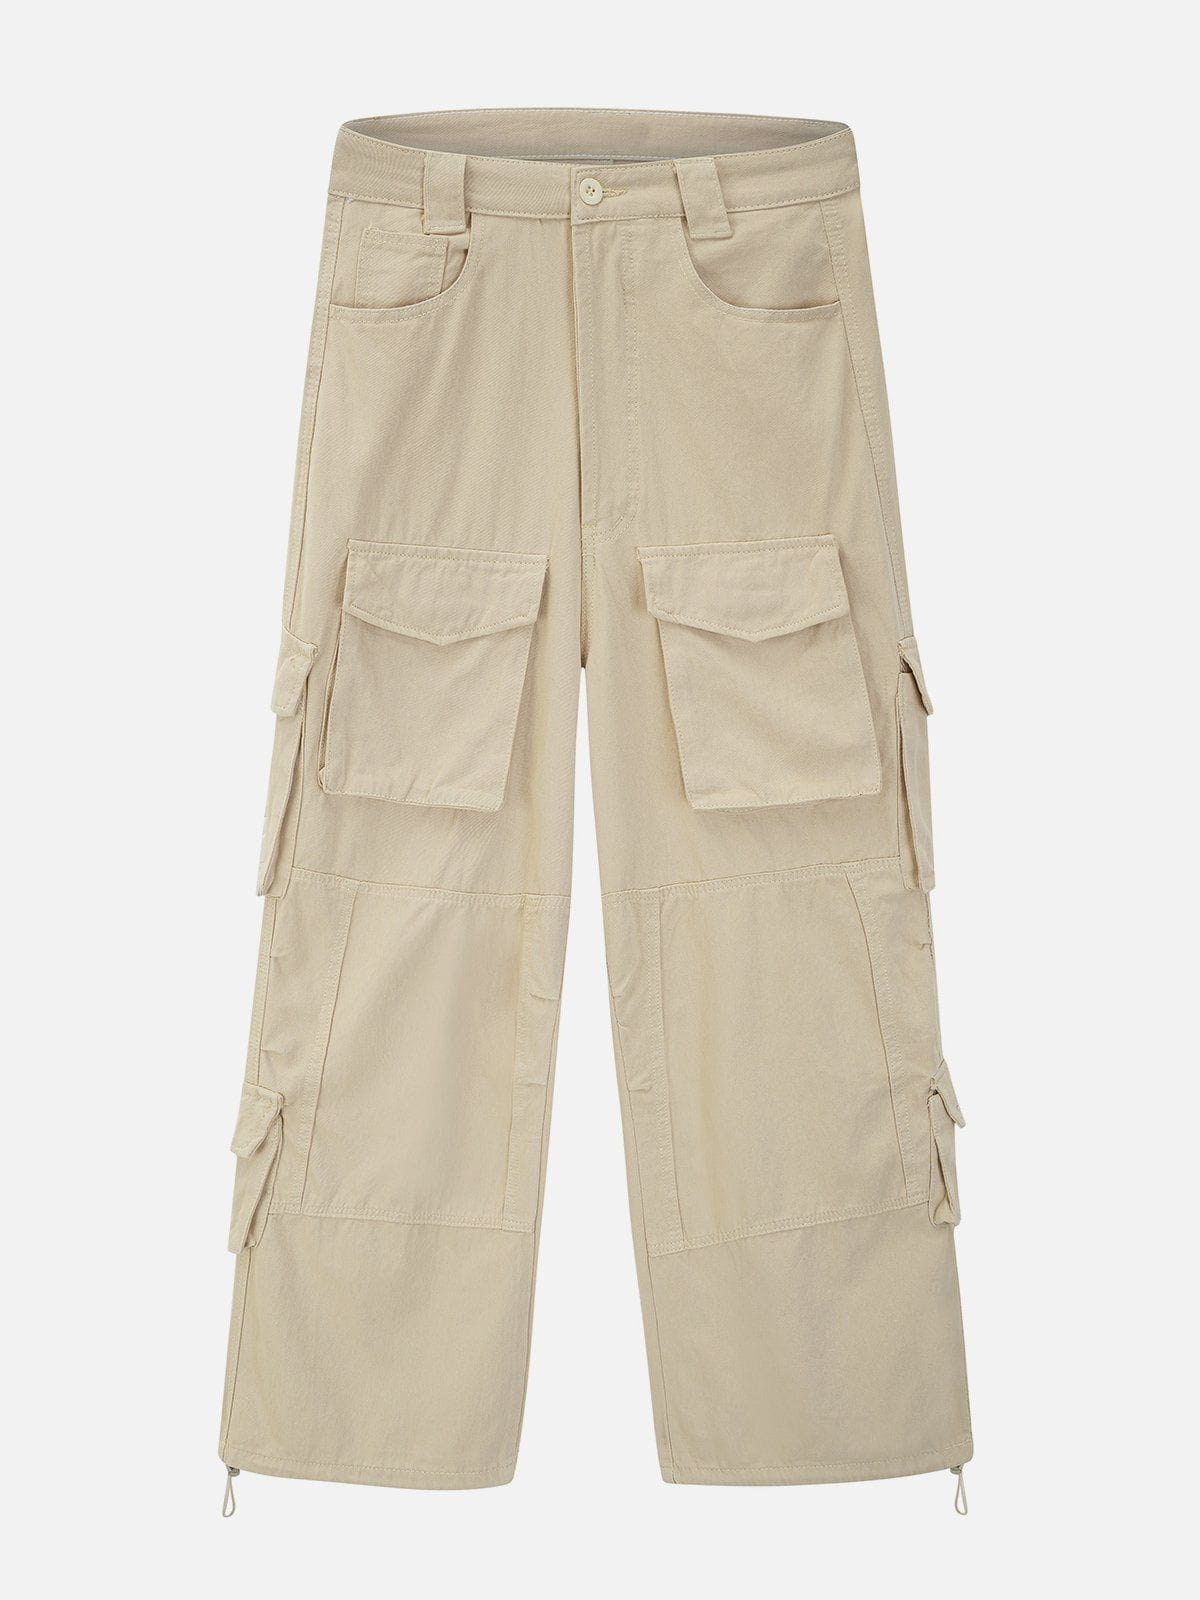 Sneakerland® - Vintage Multi-Pocket Solid Cargo Pants